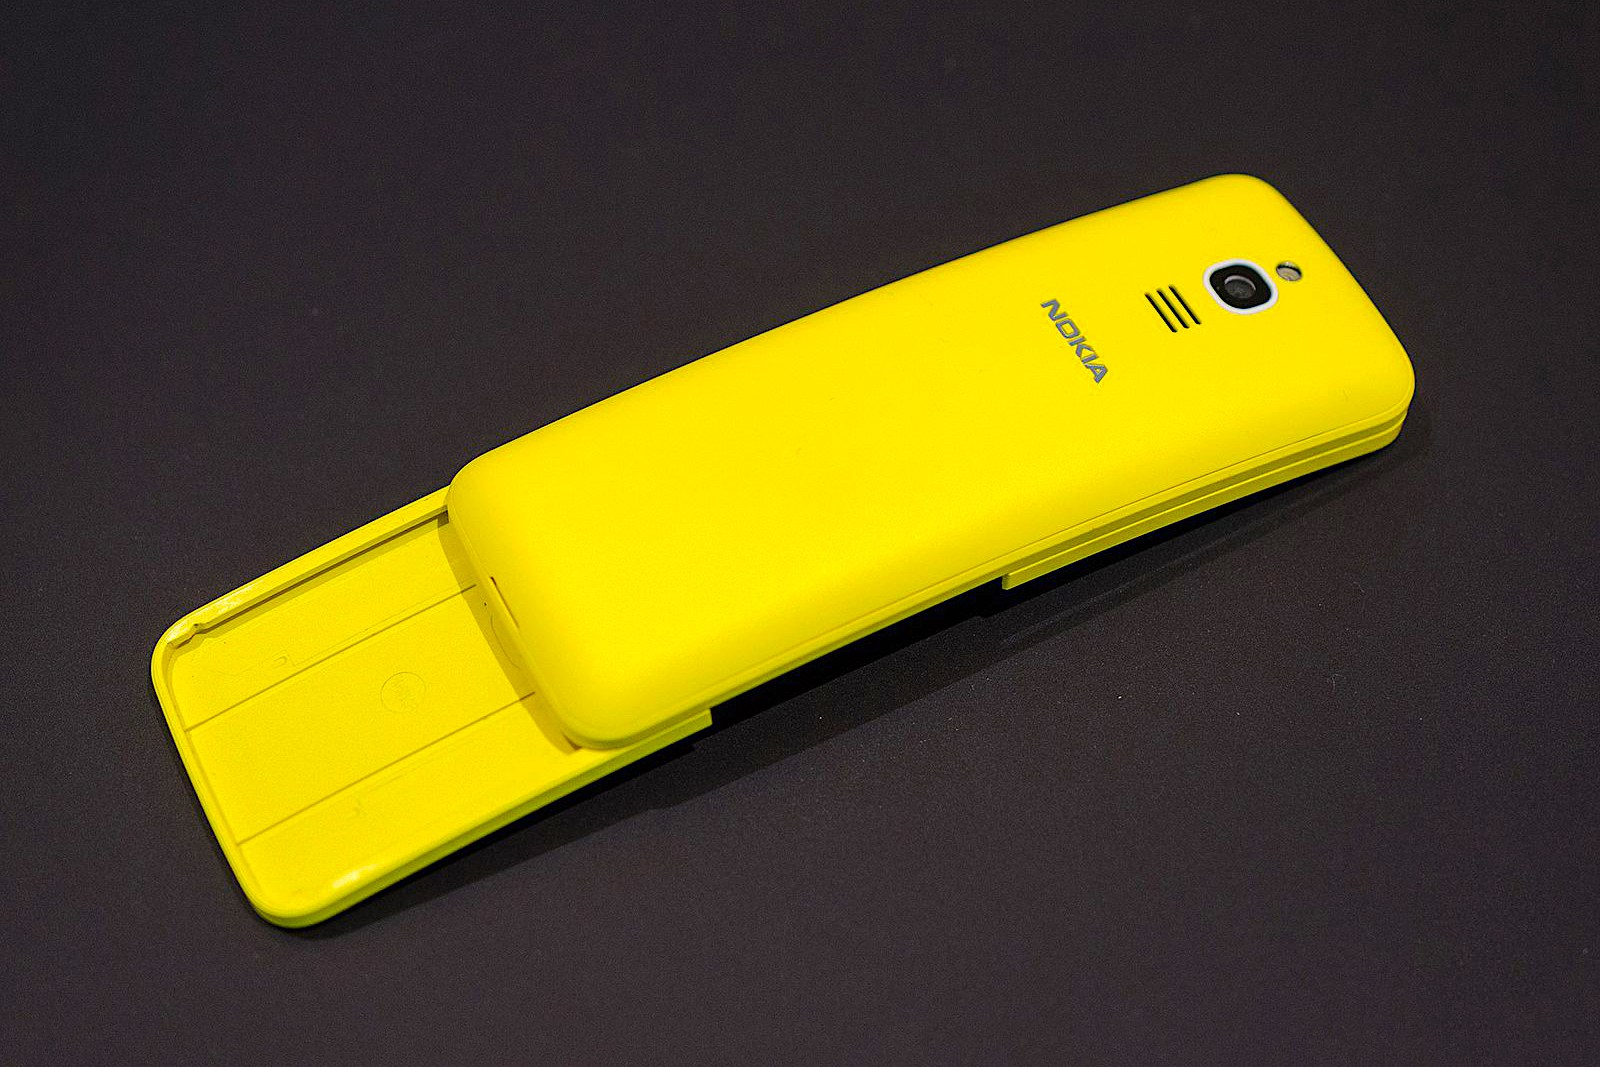 Nokia 再次传奇《The Matrix》中的經典下滑盖手机 8110